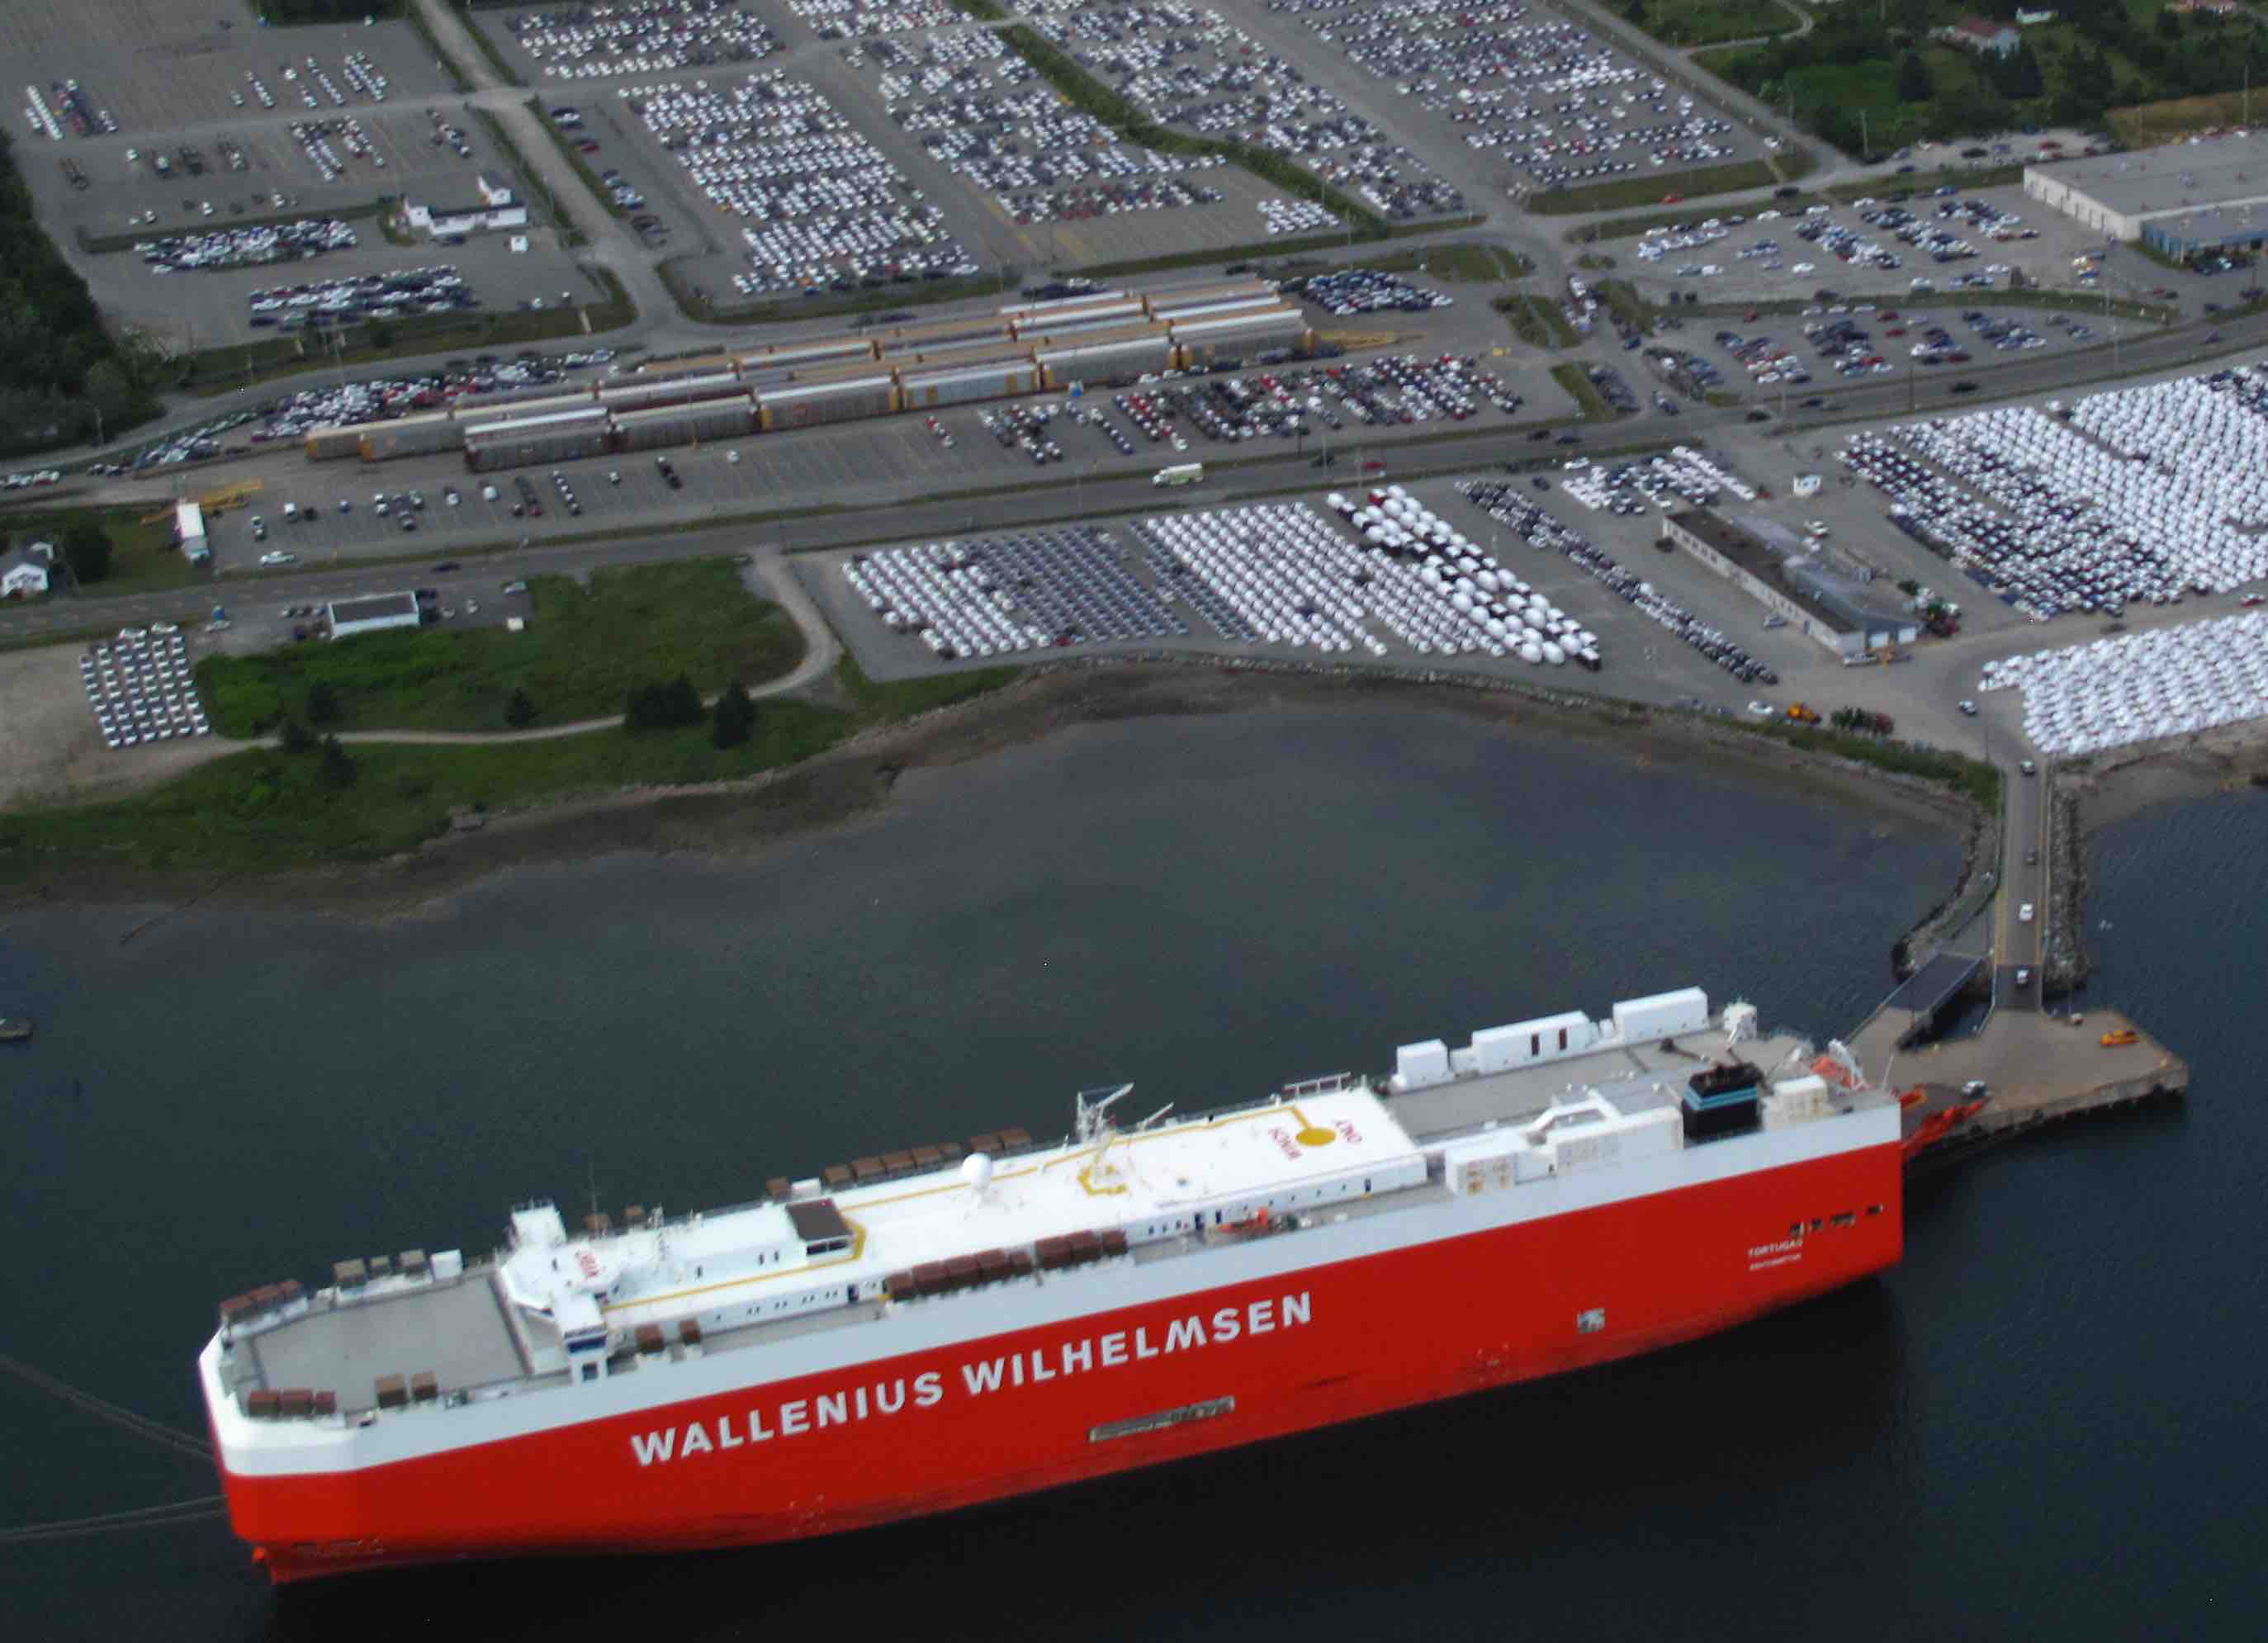 Auto logistics drive port activity ~ Shipping Matters Blog